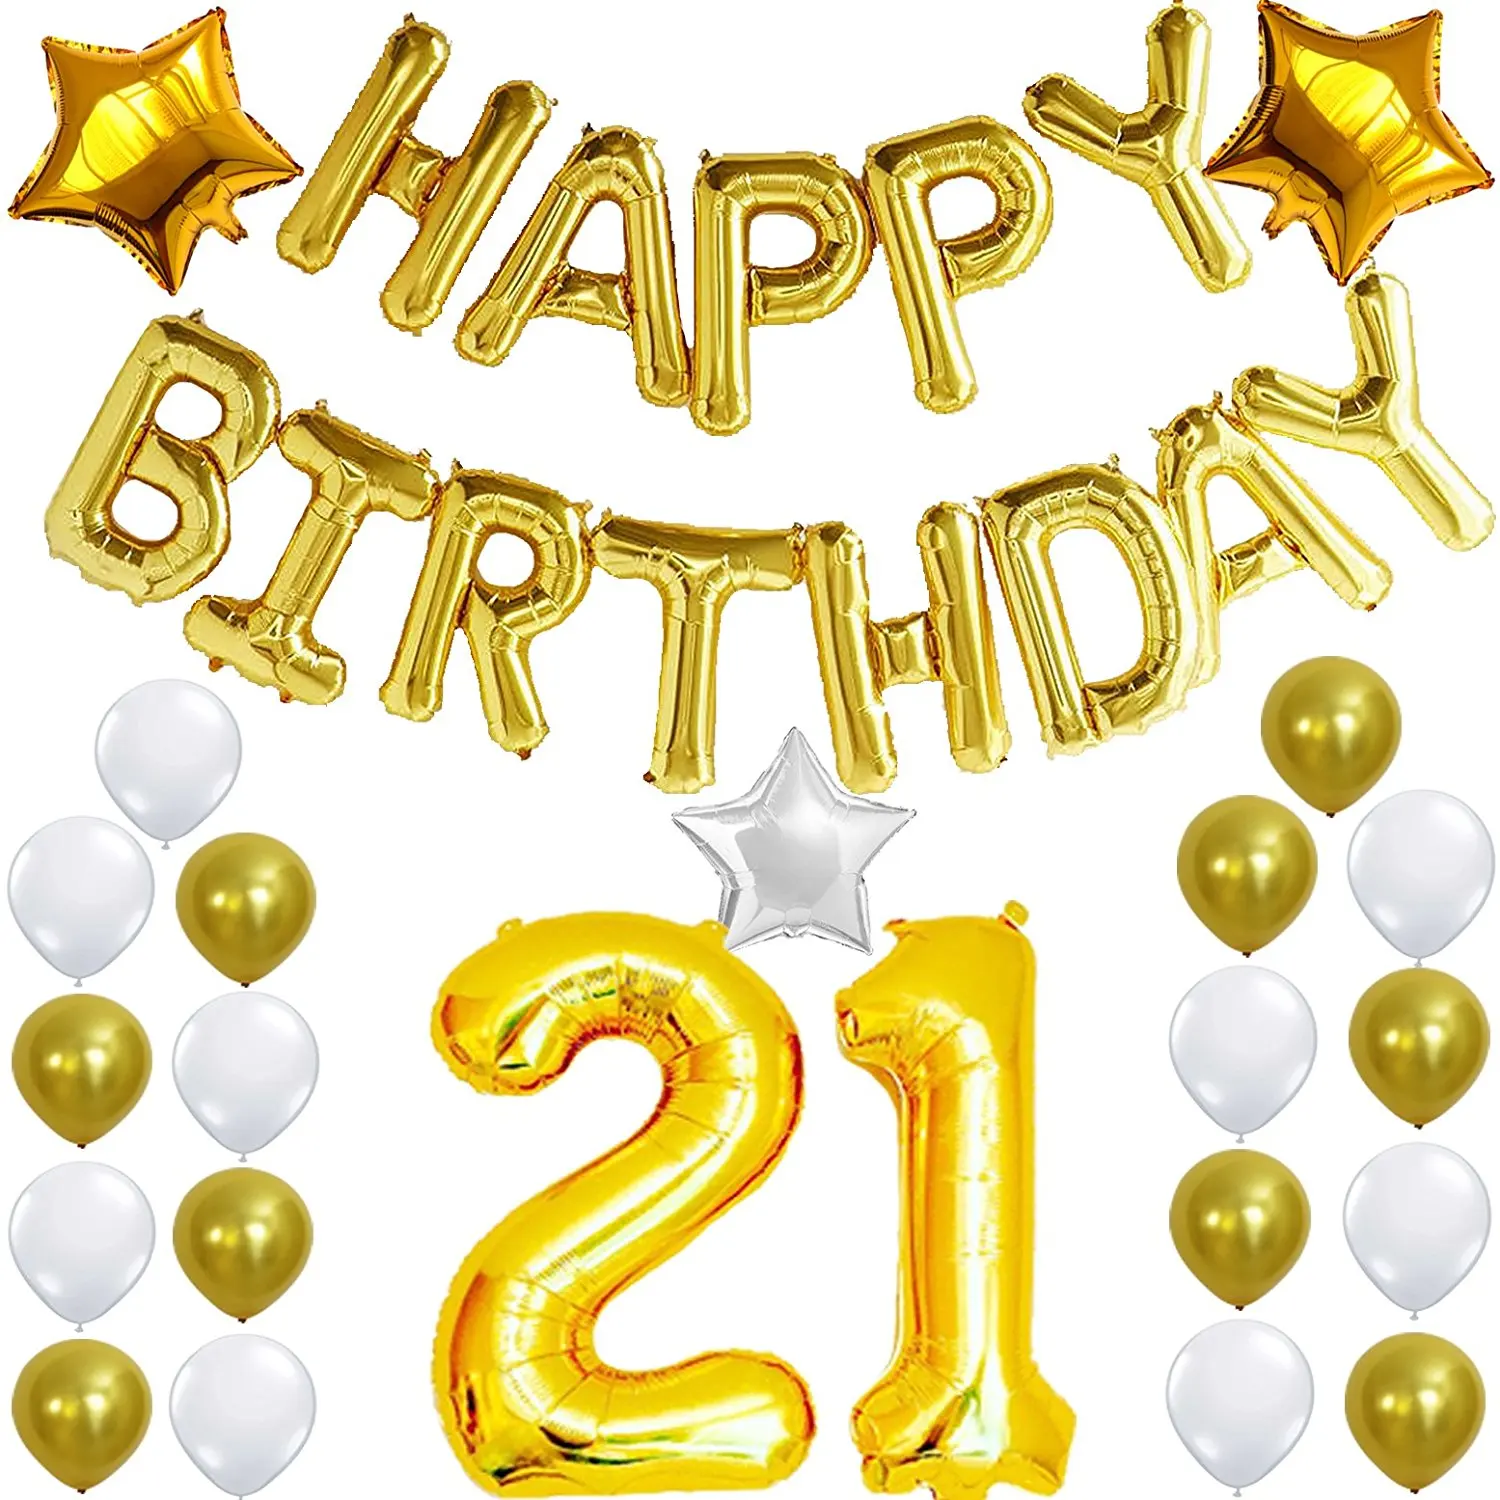 buy-21st-birthday-decorations-party-kit-happy-birthday-balloon-banner